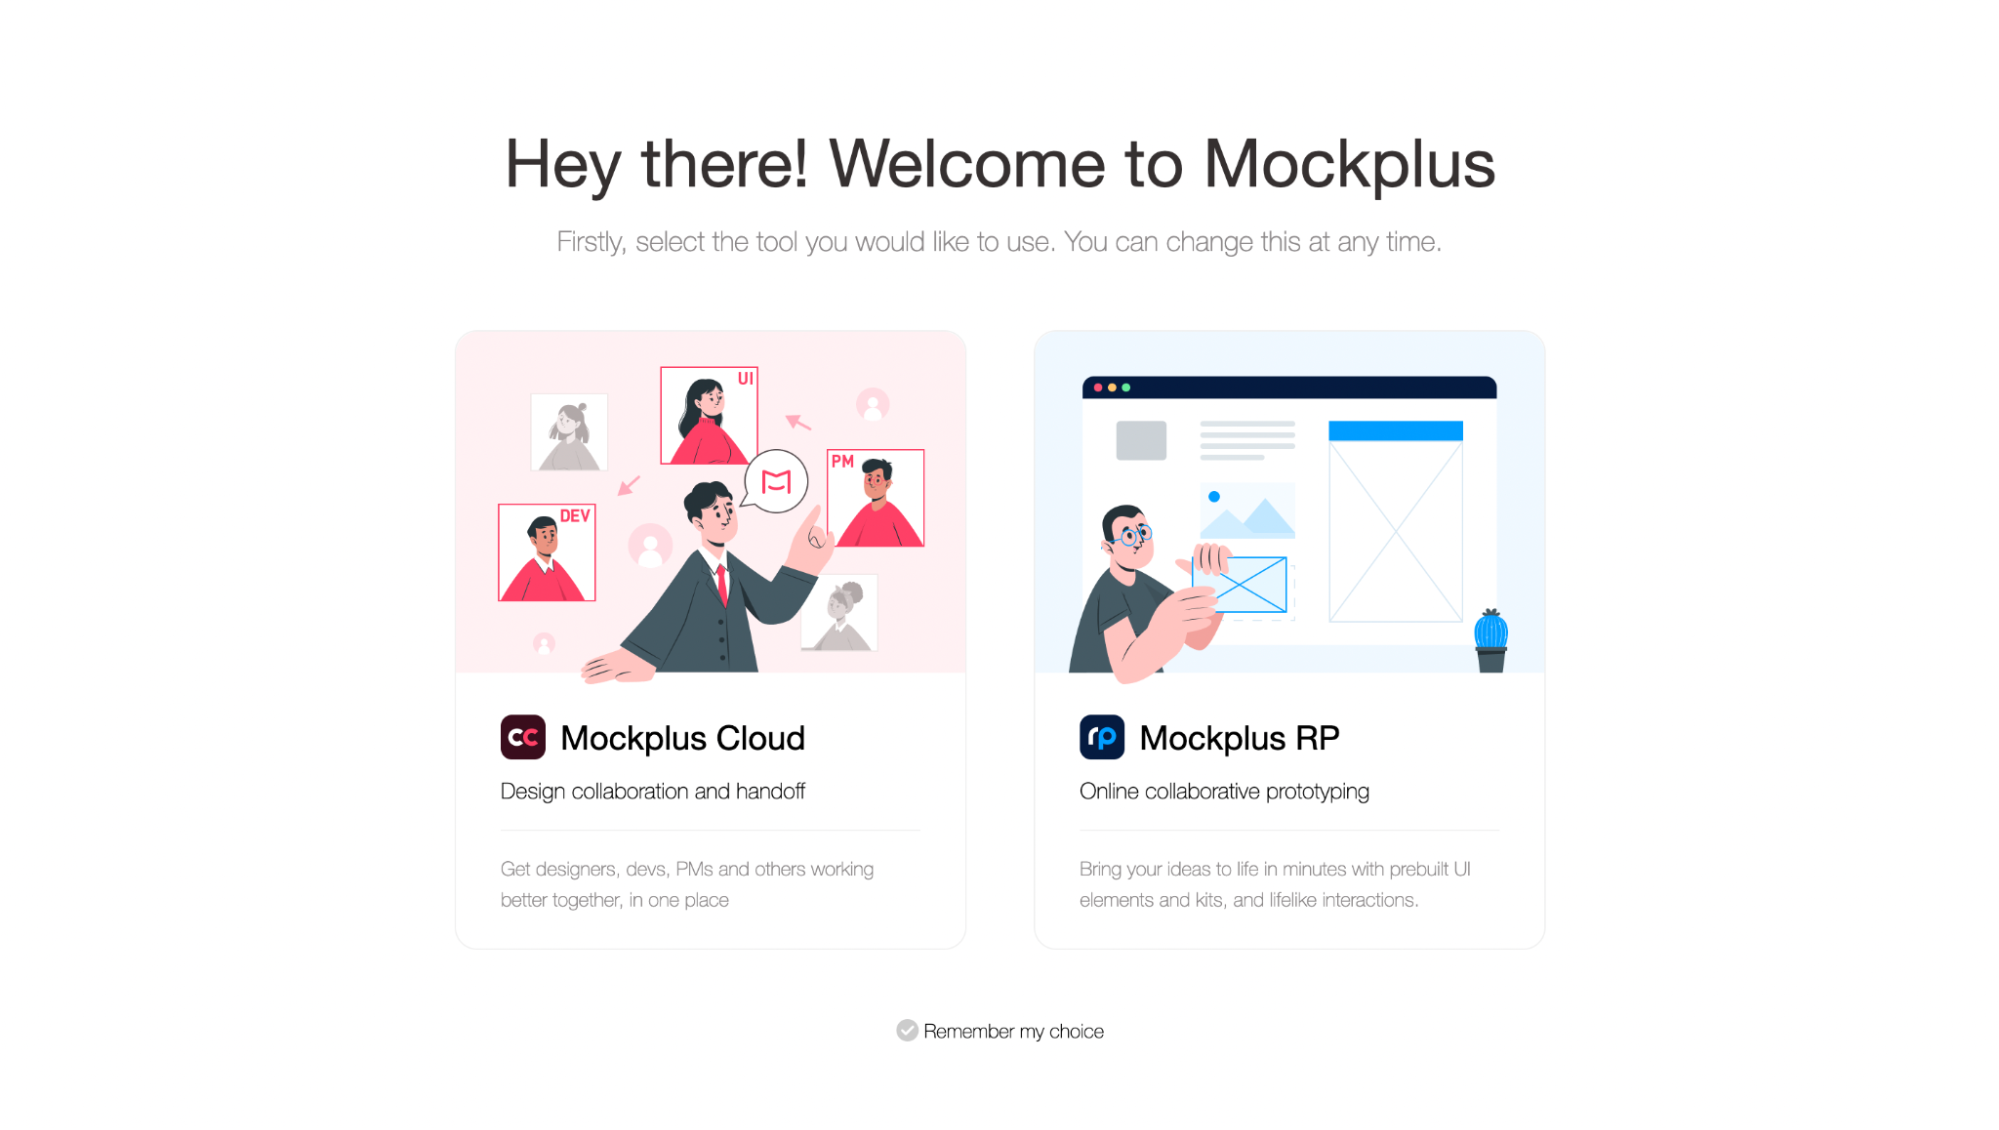 Launching Mockplus RP